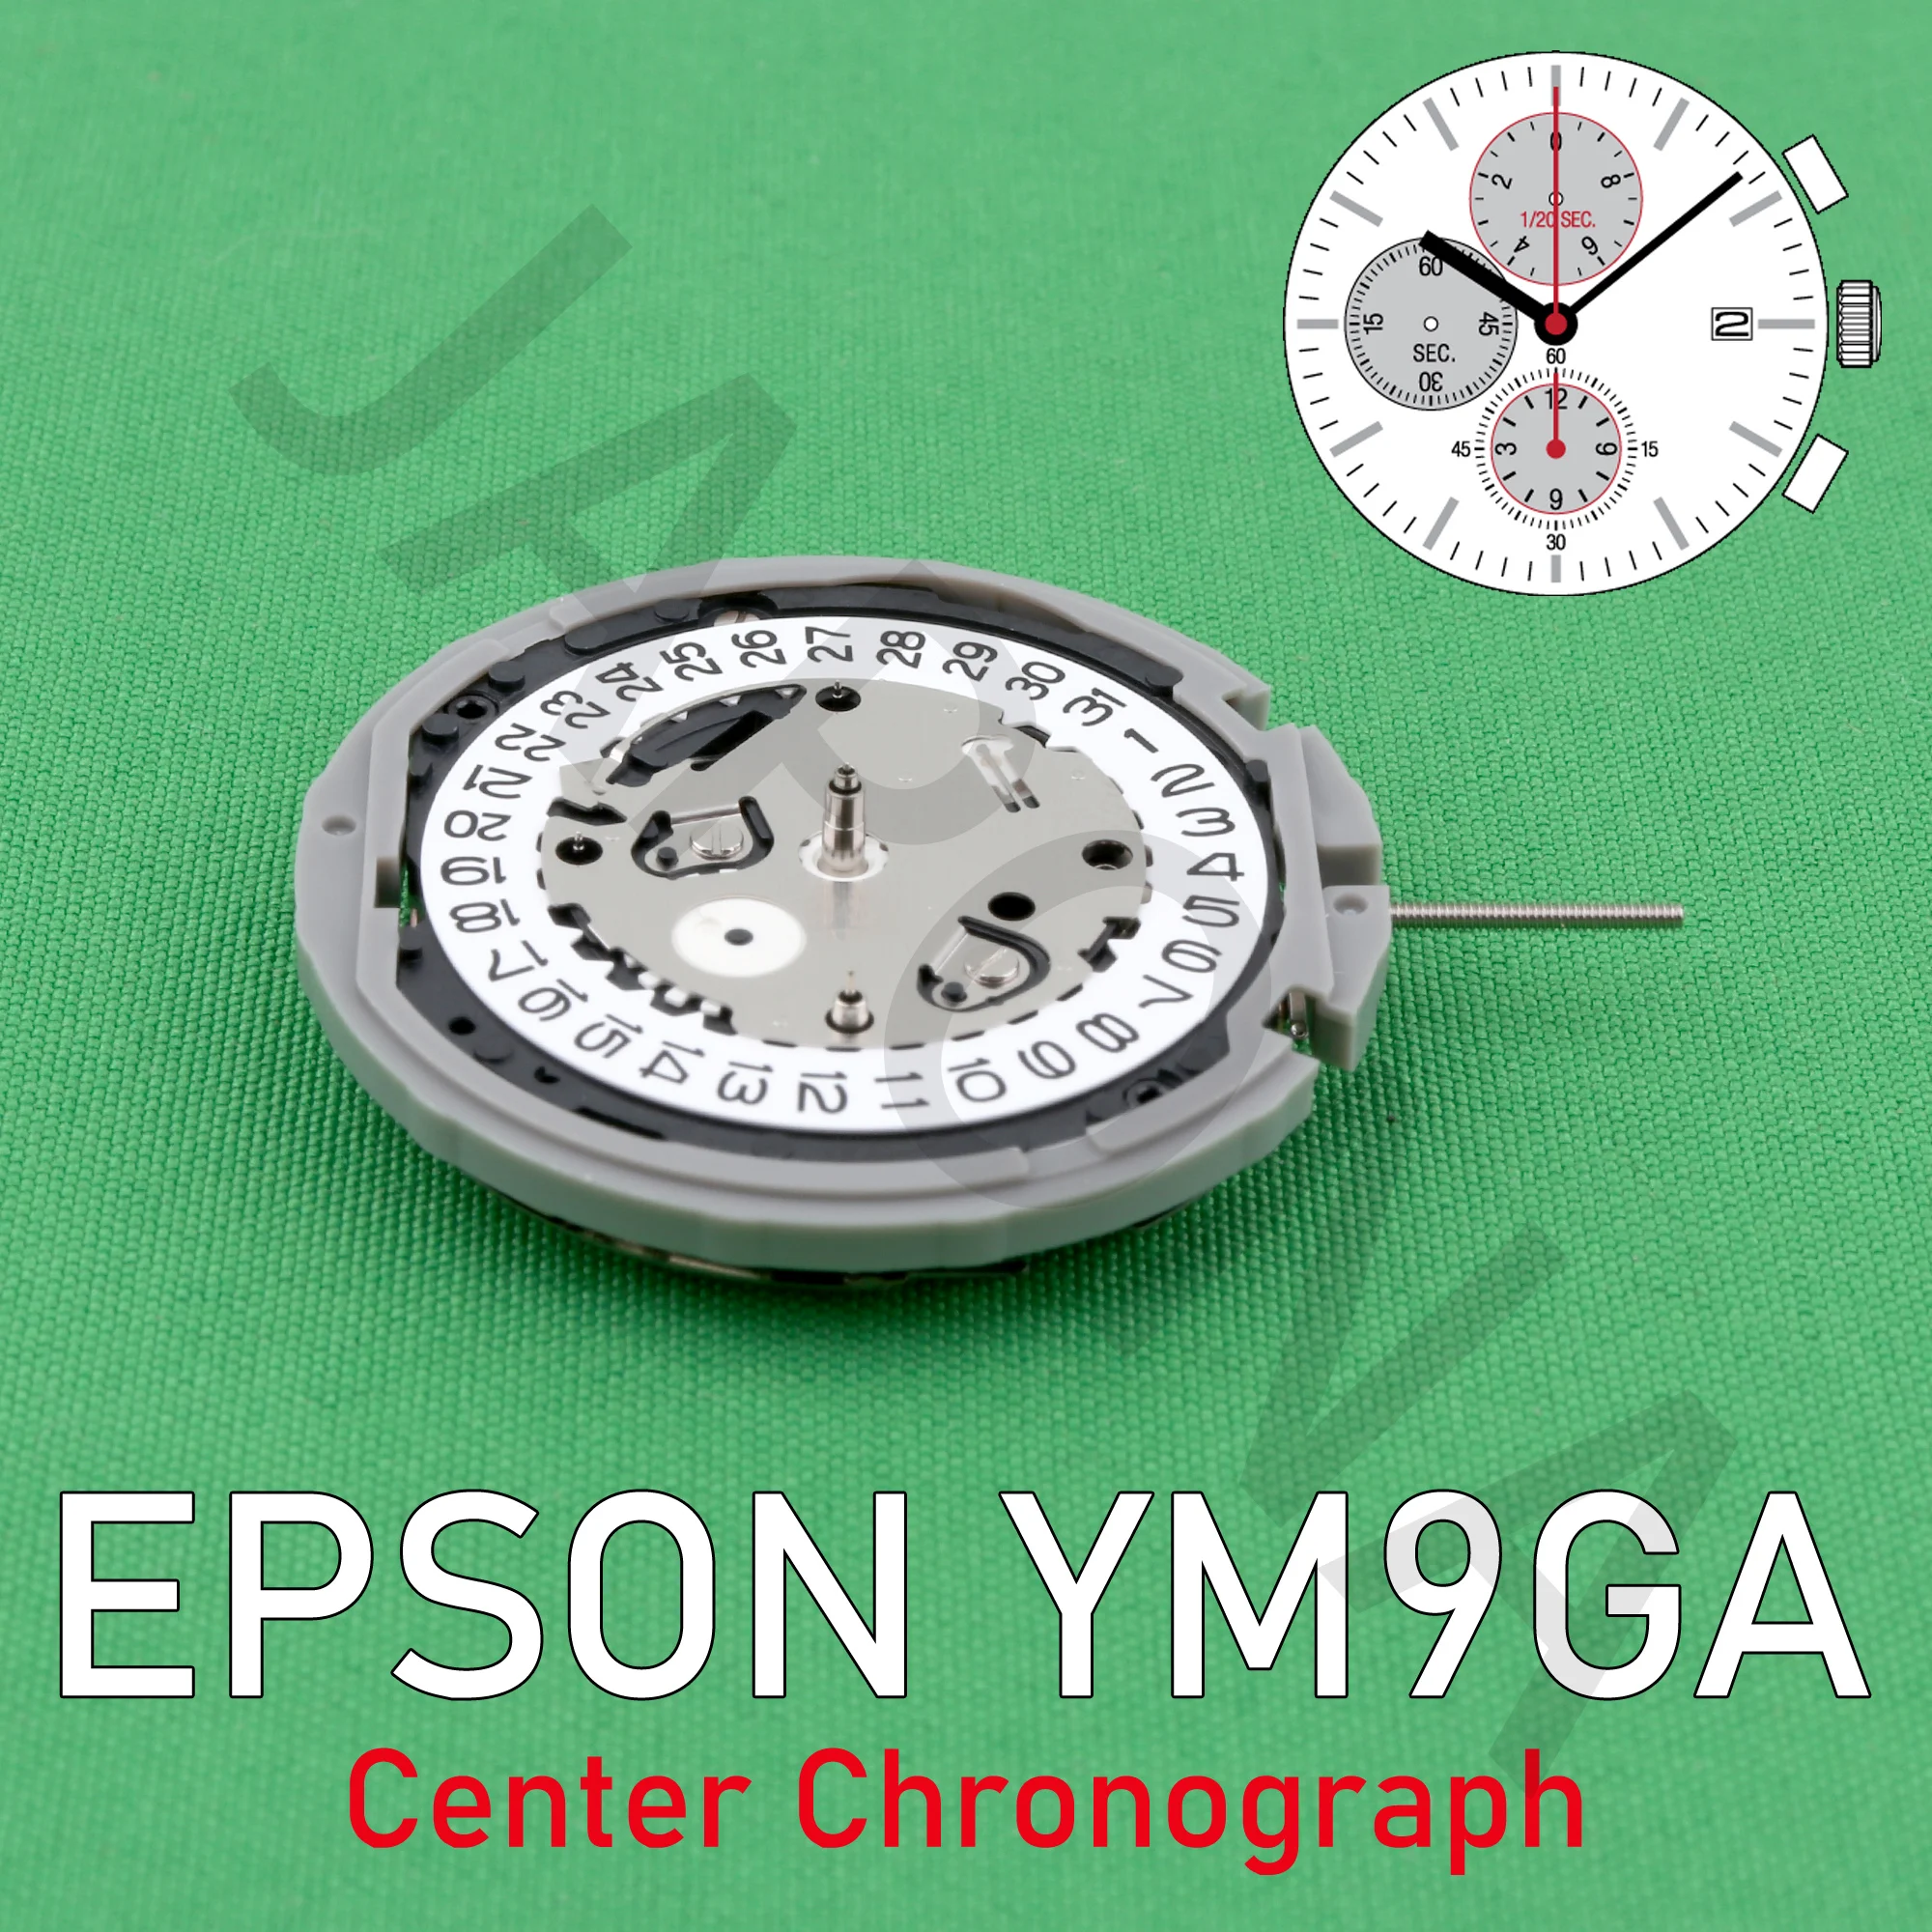 Механизъм YM9G Япония Механизъм EPSON YM9GA малки стрелки на 6.9.12 Аналогов кварцов 12-инчов централен секунди хронограф Изображение 1